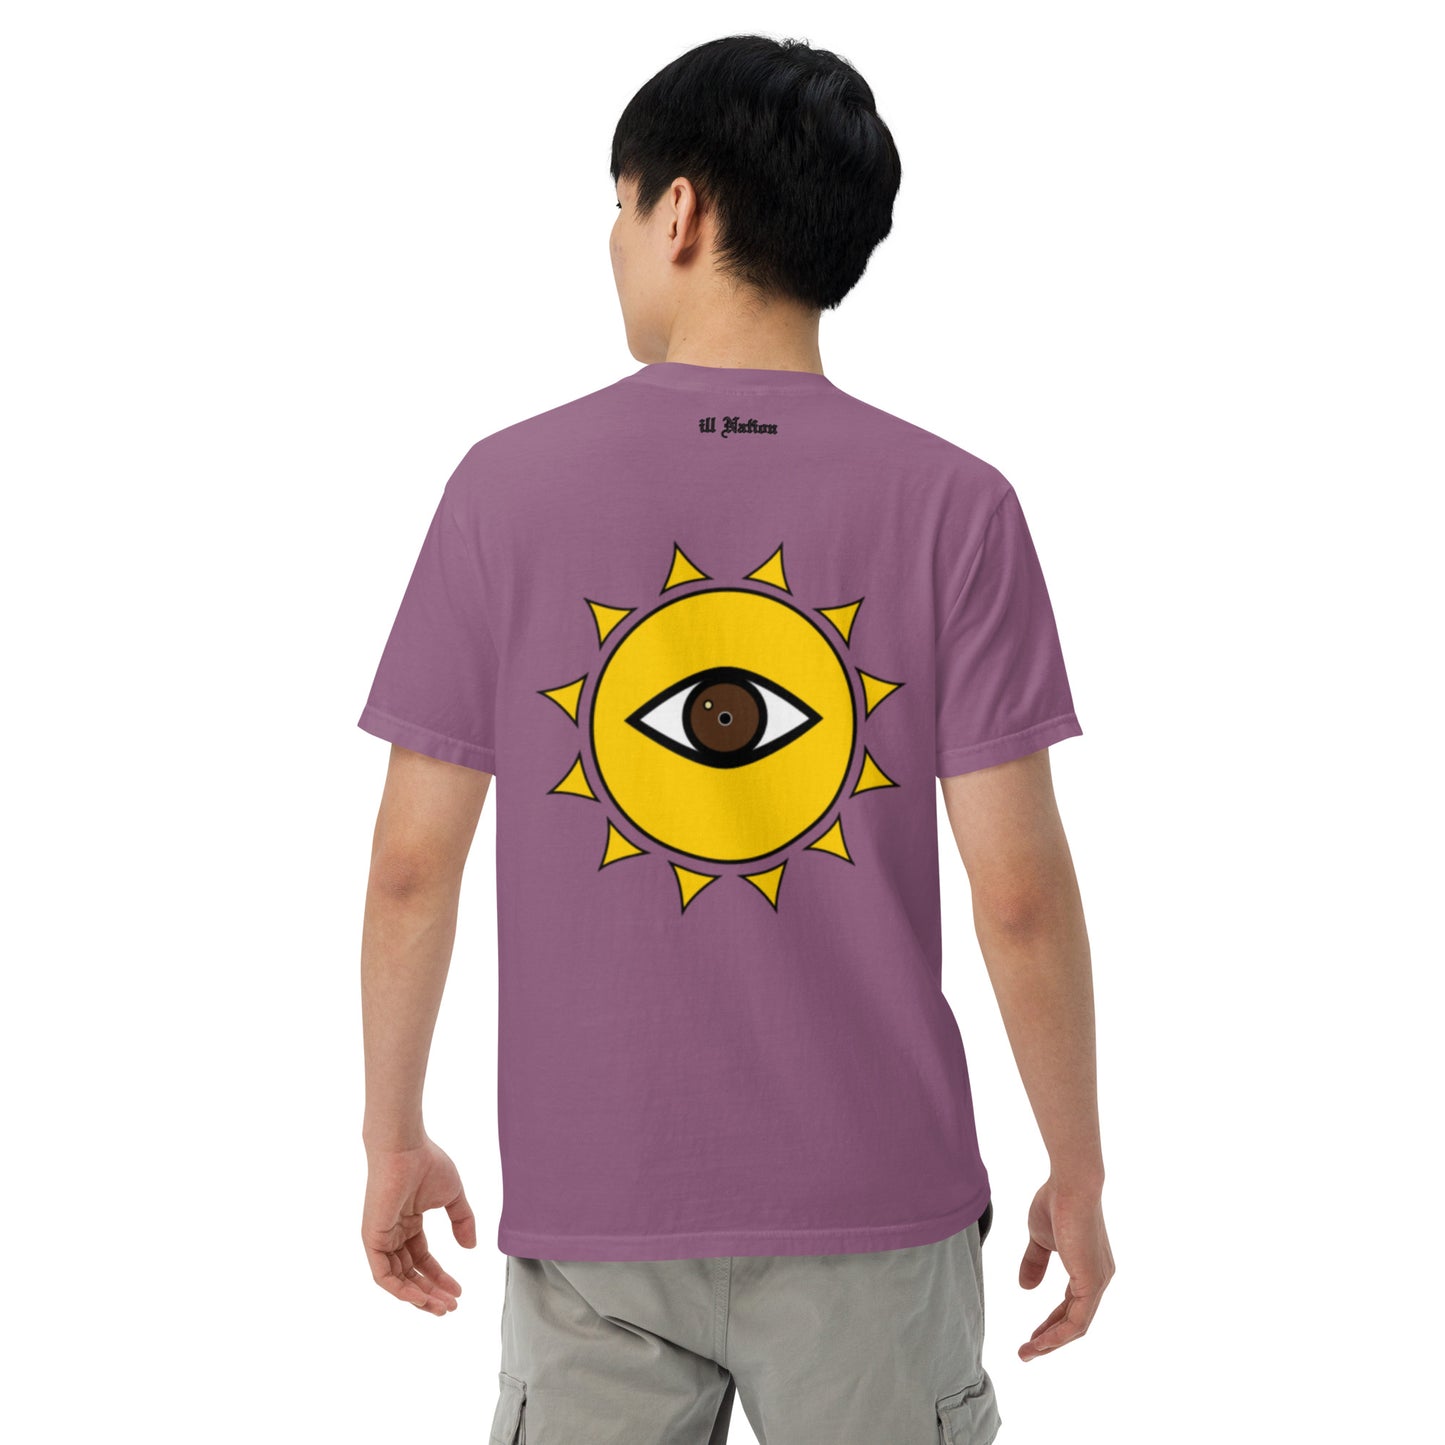 illNation “Sun=Vision” Graphic Tee